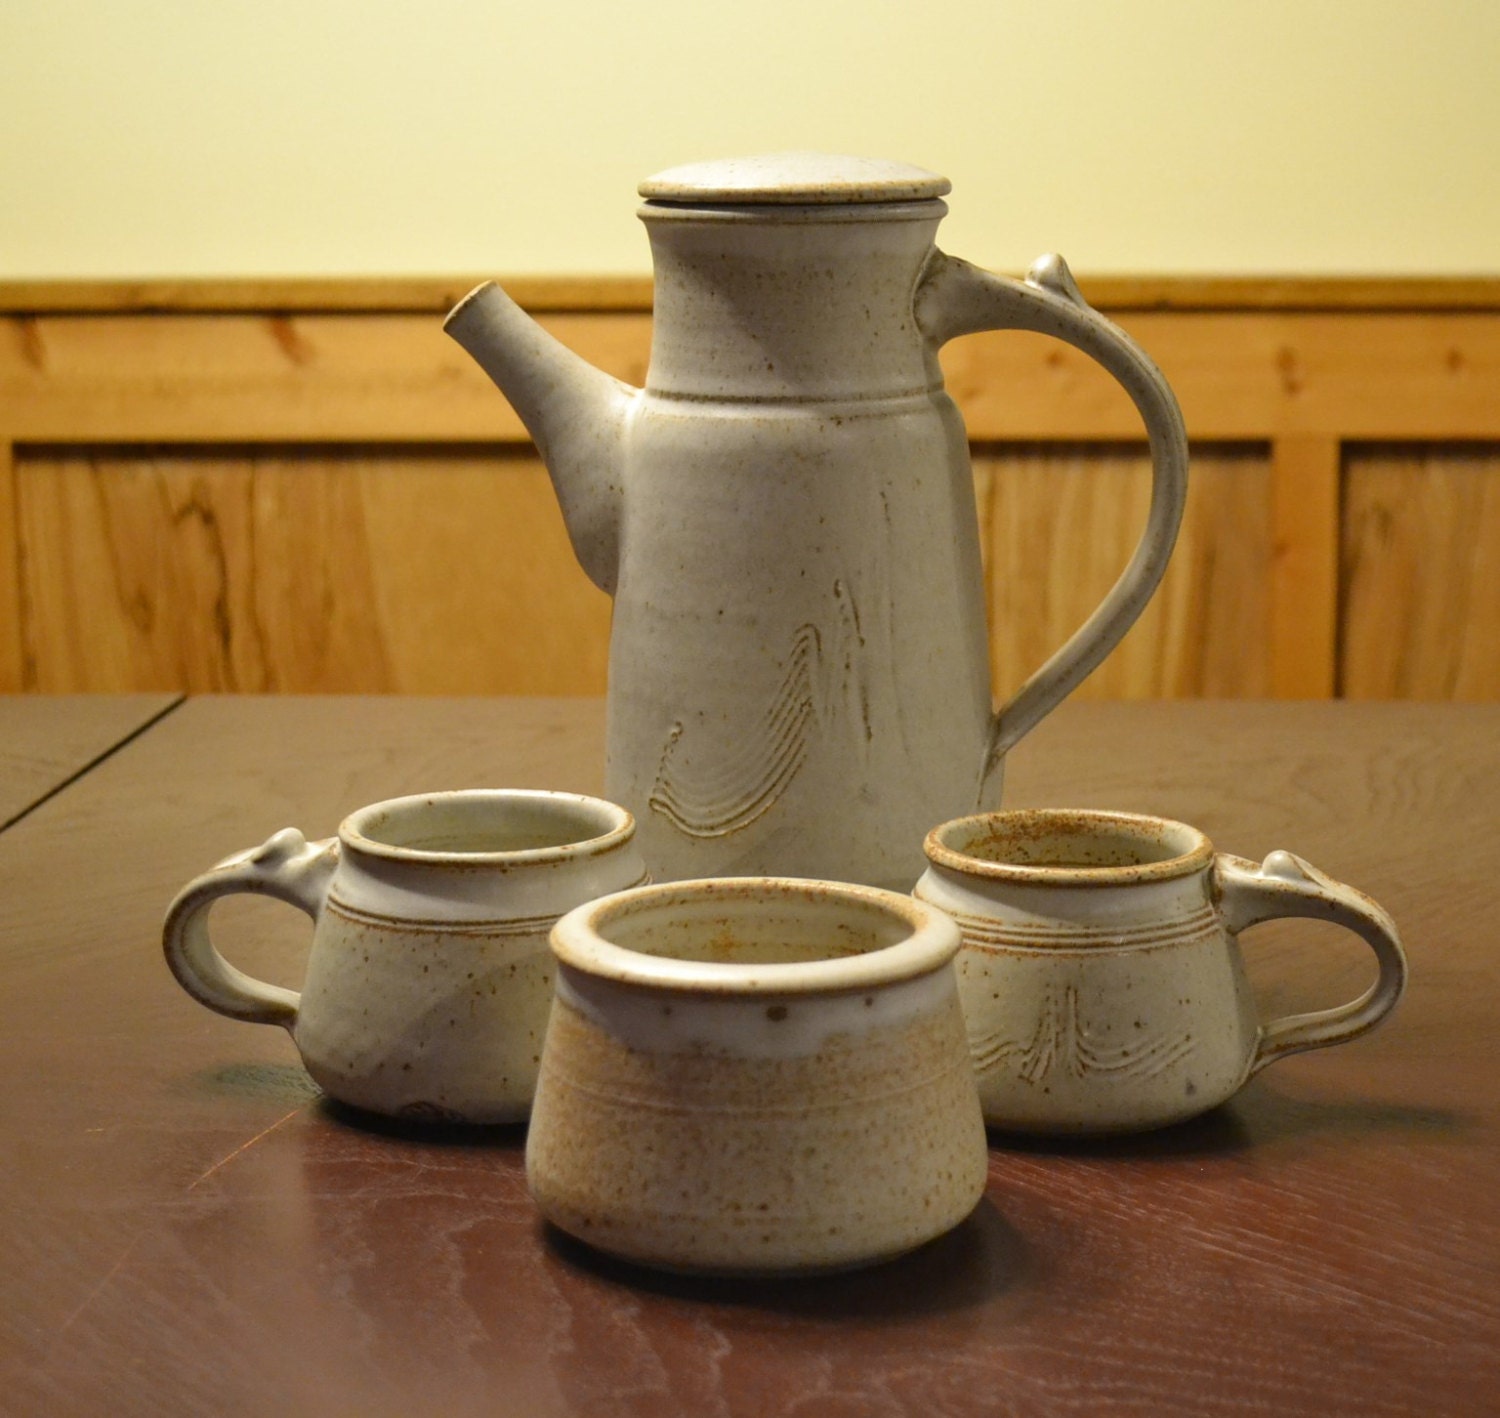 Vintage Goodsell Pottery Teapot Coffee Pot Mugs Sugar Bowl Tea Set Studio Pottery Handmade PanchosPorch - PanchosPorch